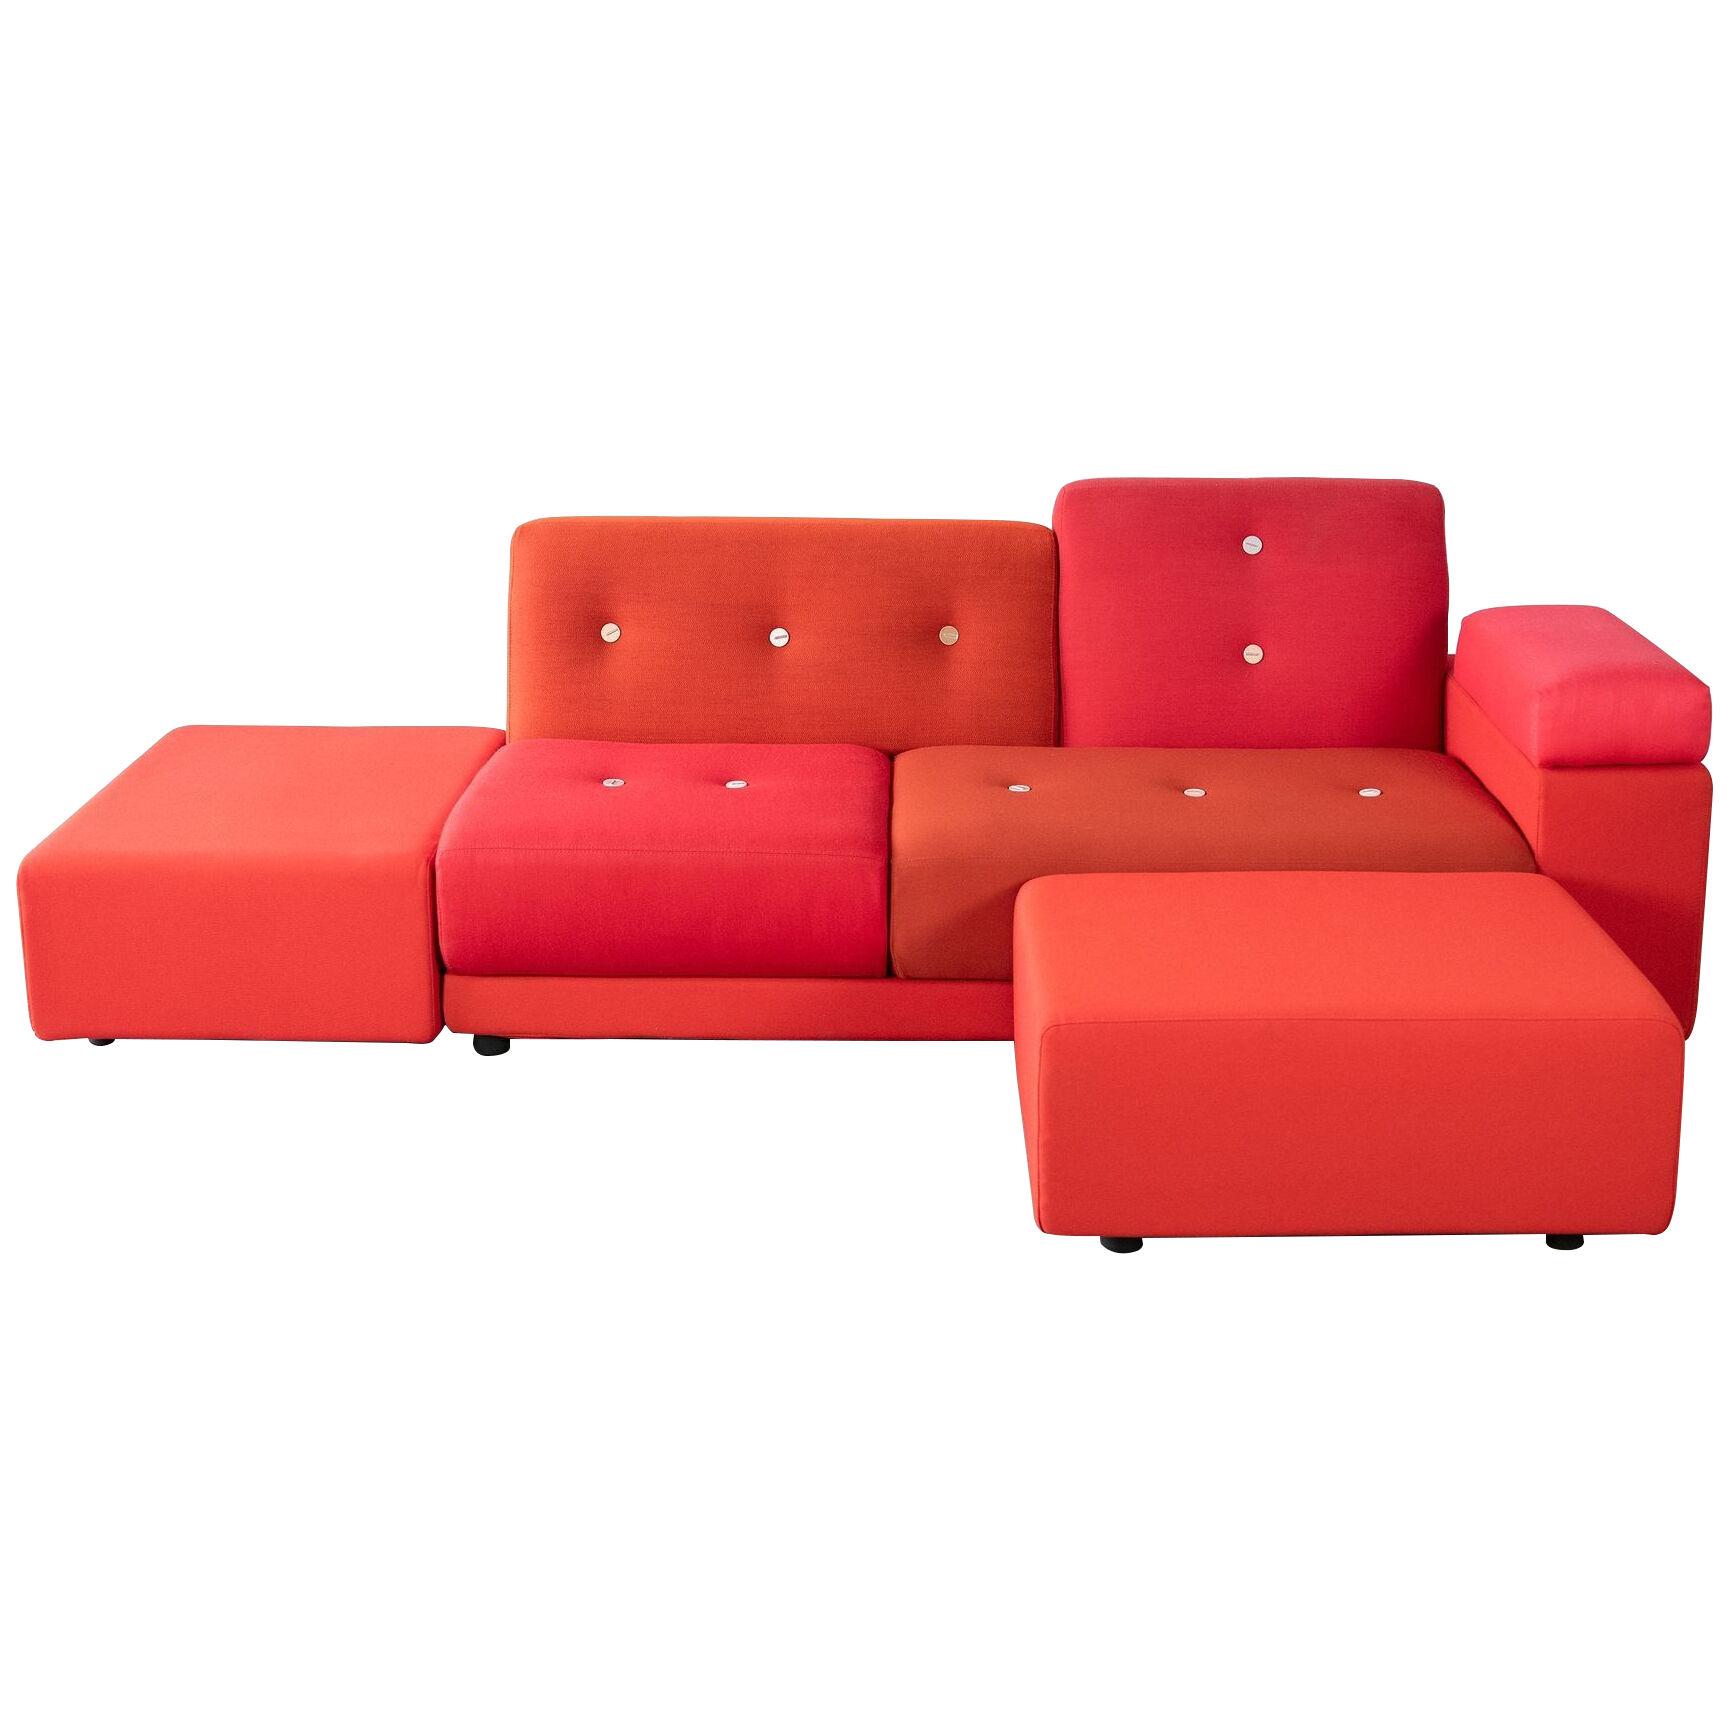 Hella Jongerius Polder Sofa for Vitra Sleek Contemporary Designer Style